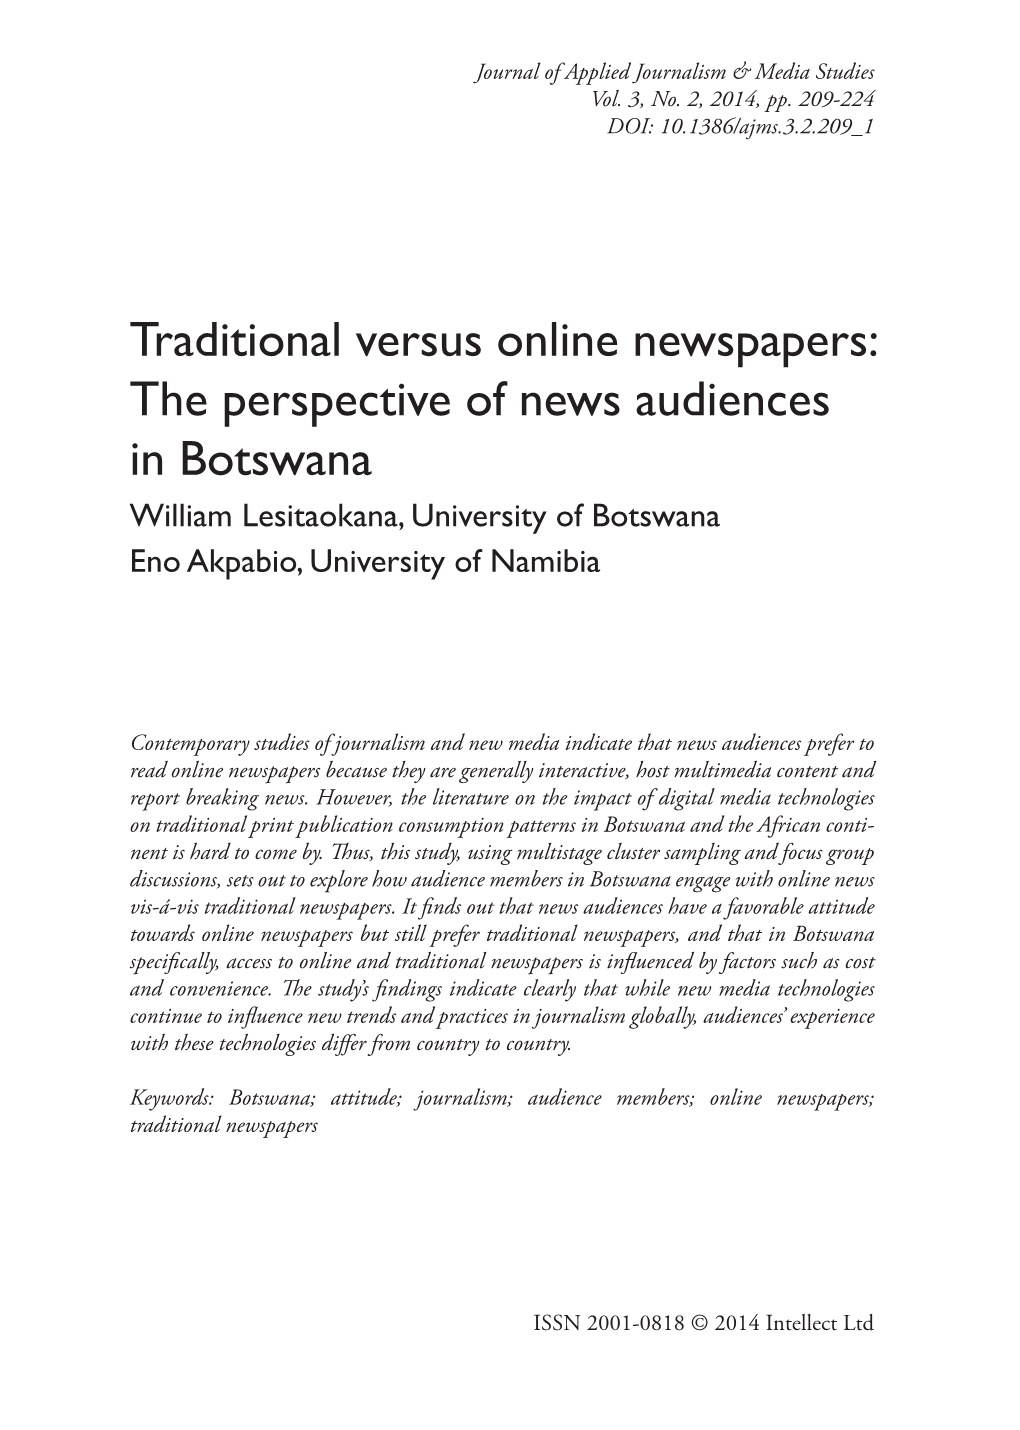 Traditional Versus Online Newspapers: the Perspective of News Audiences in Botswana William Lesitaokana, University of Botswana Eno Akpabio, University of Namibia